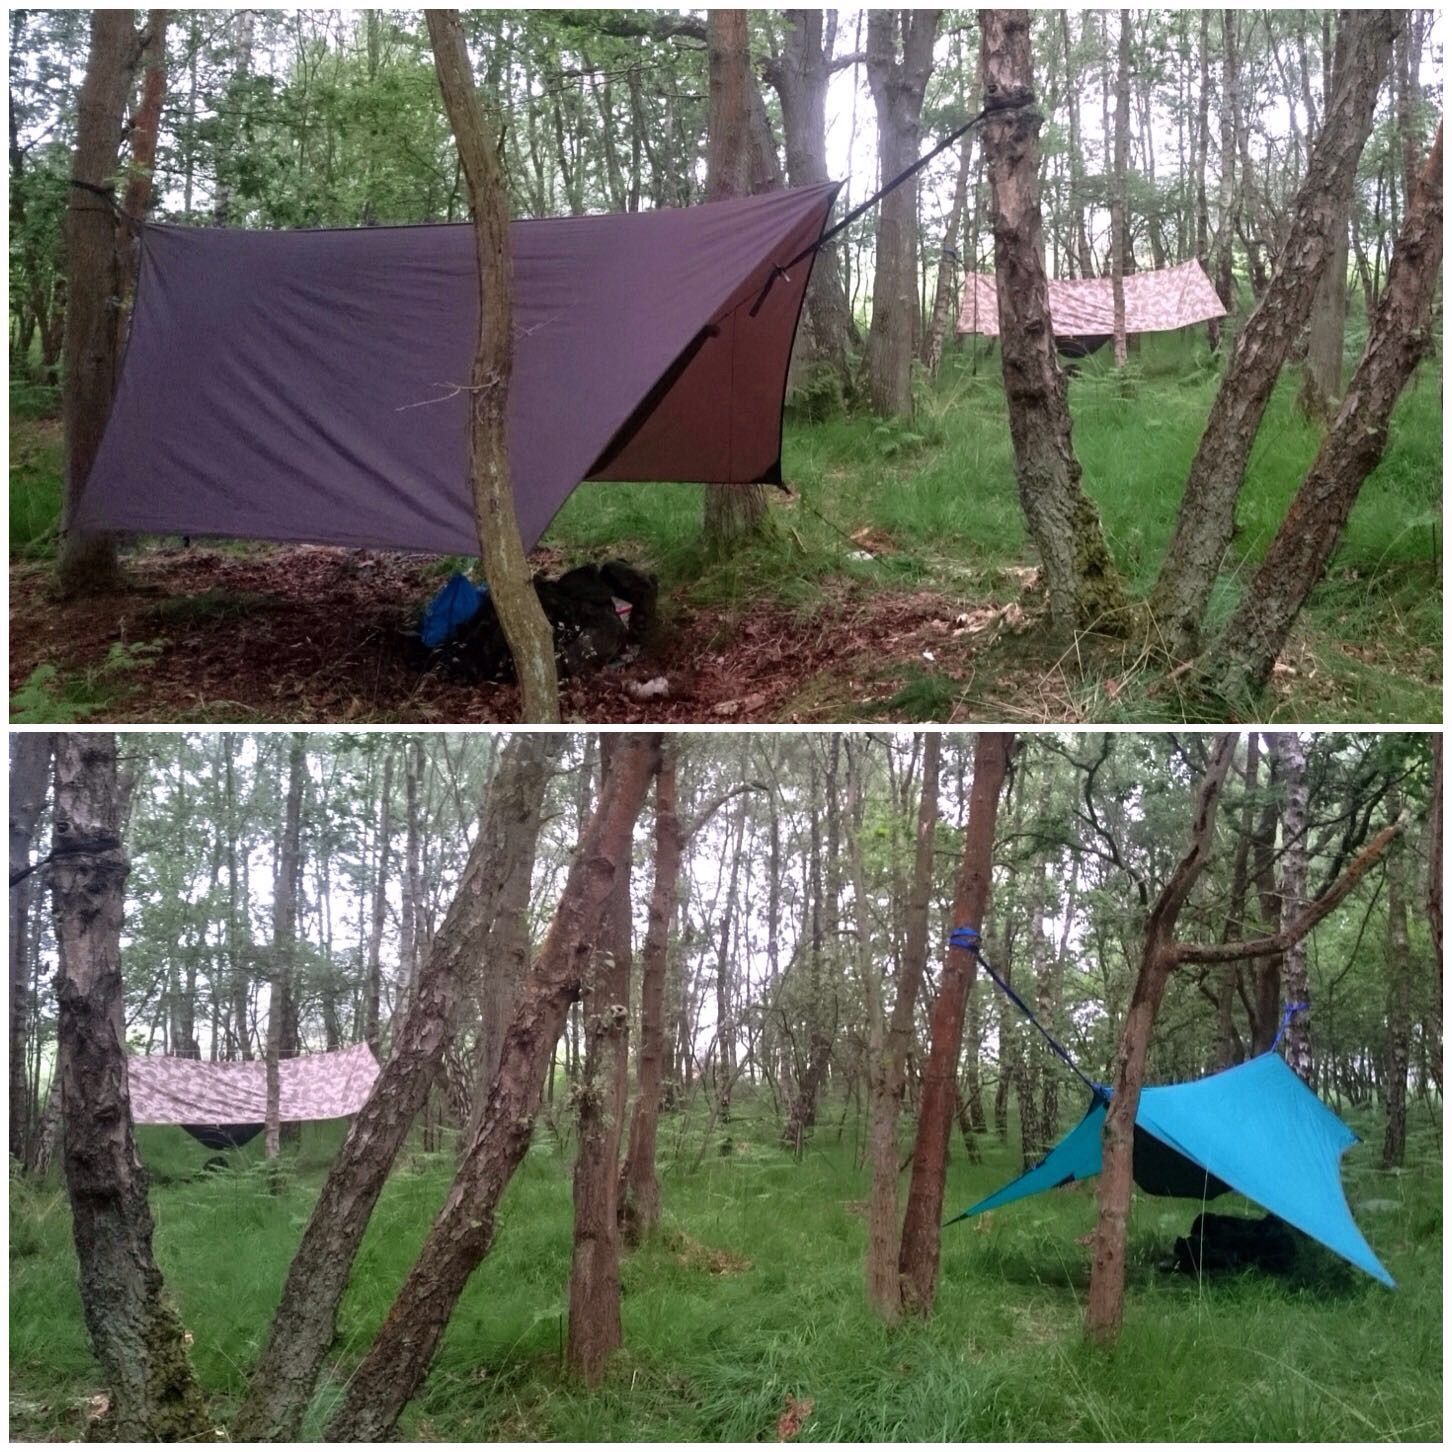 A dozen tarps and hammocks to put up